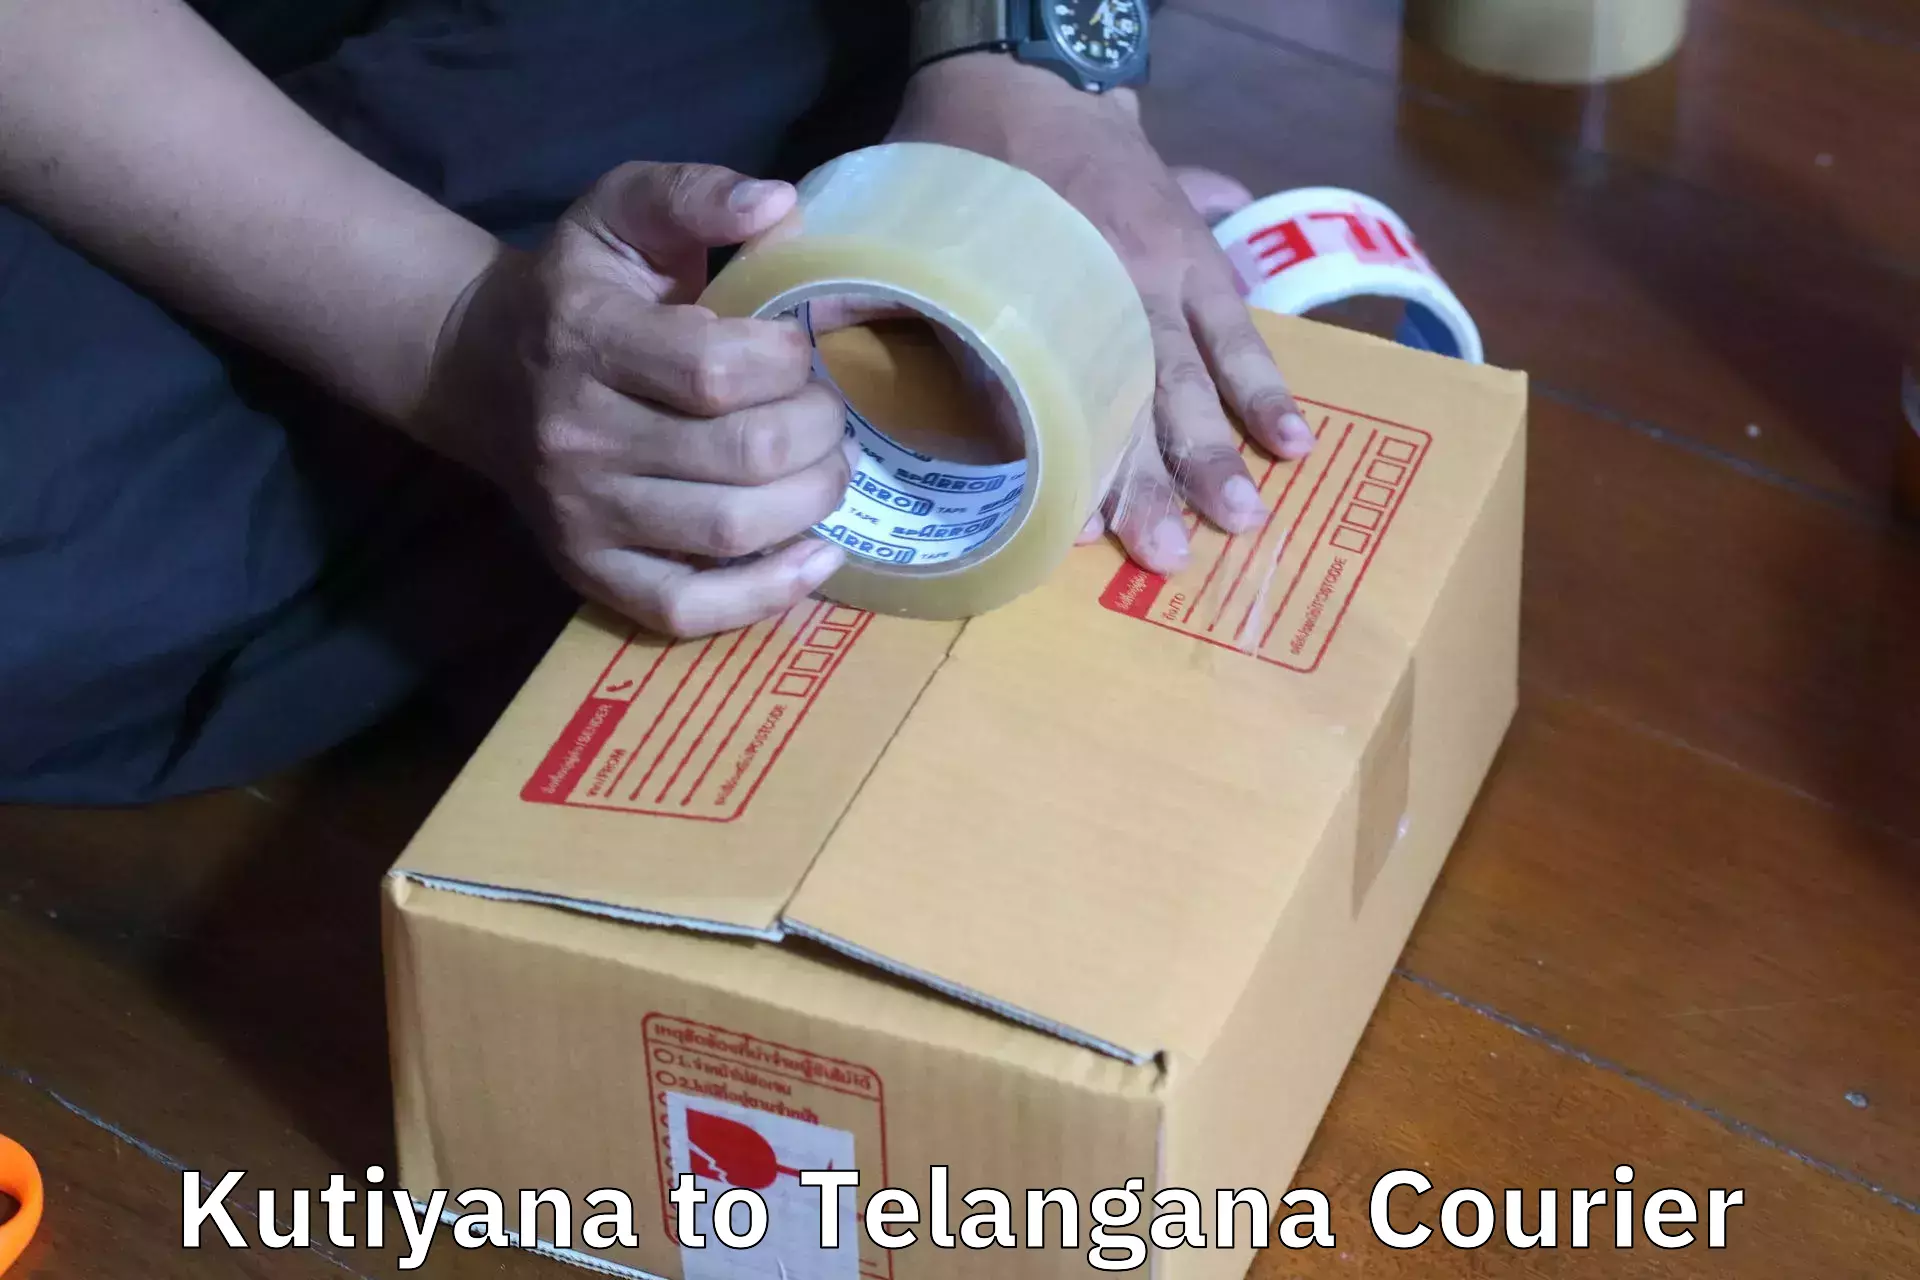 Professional moving company Kutiyana to Telangana